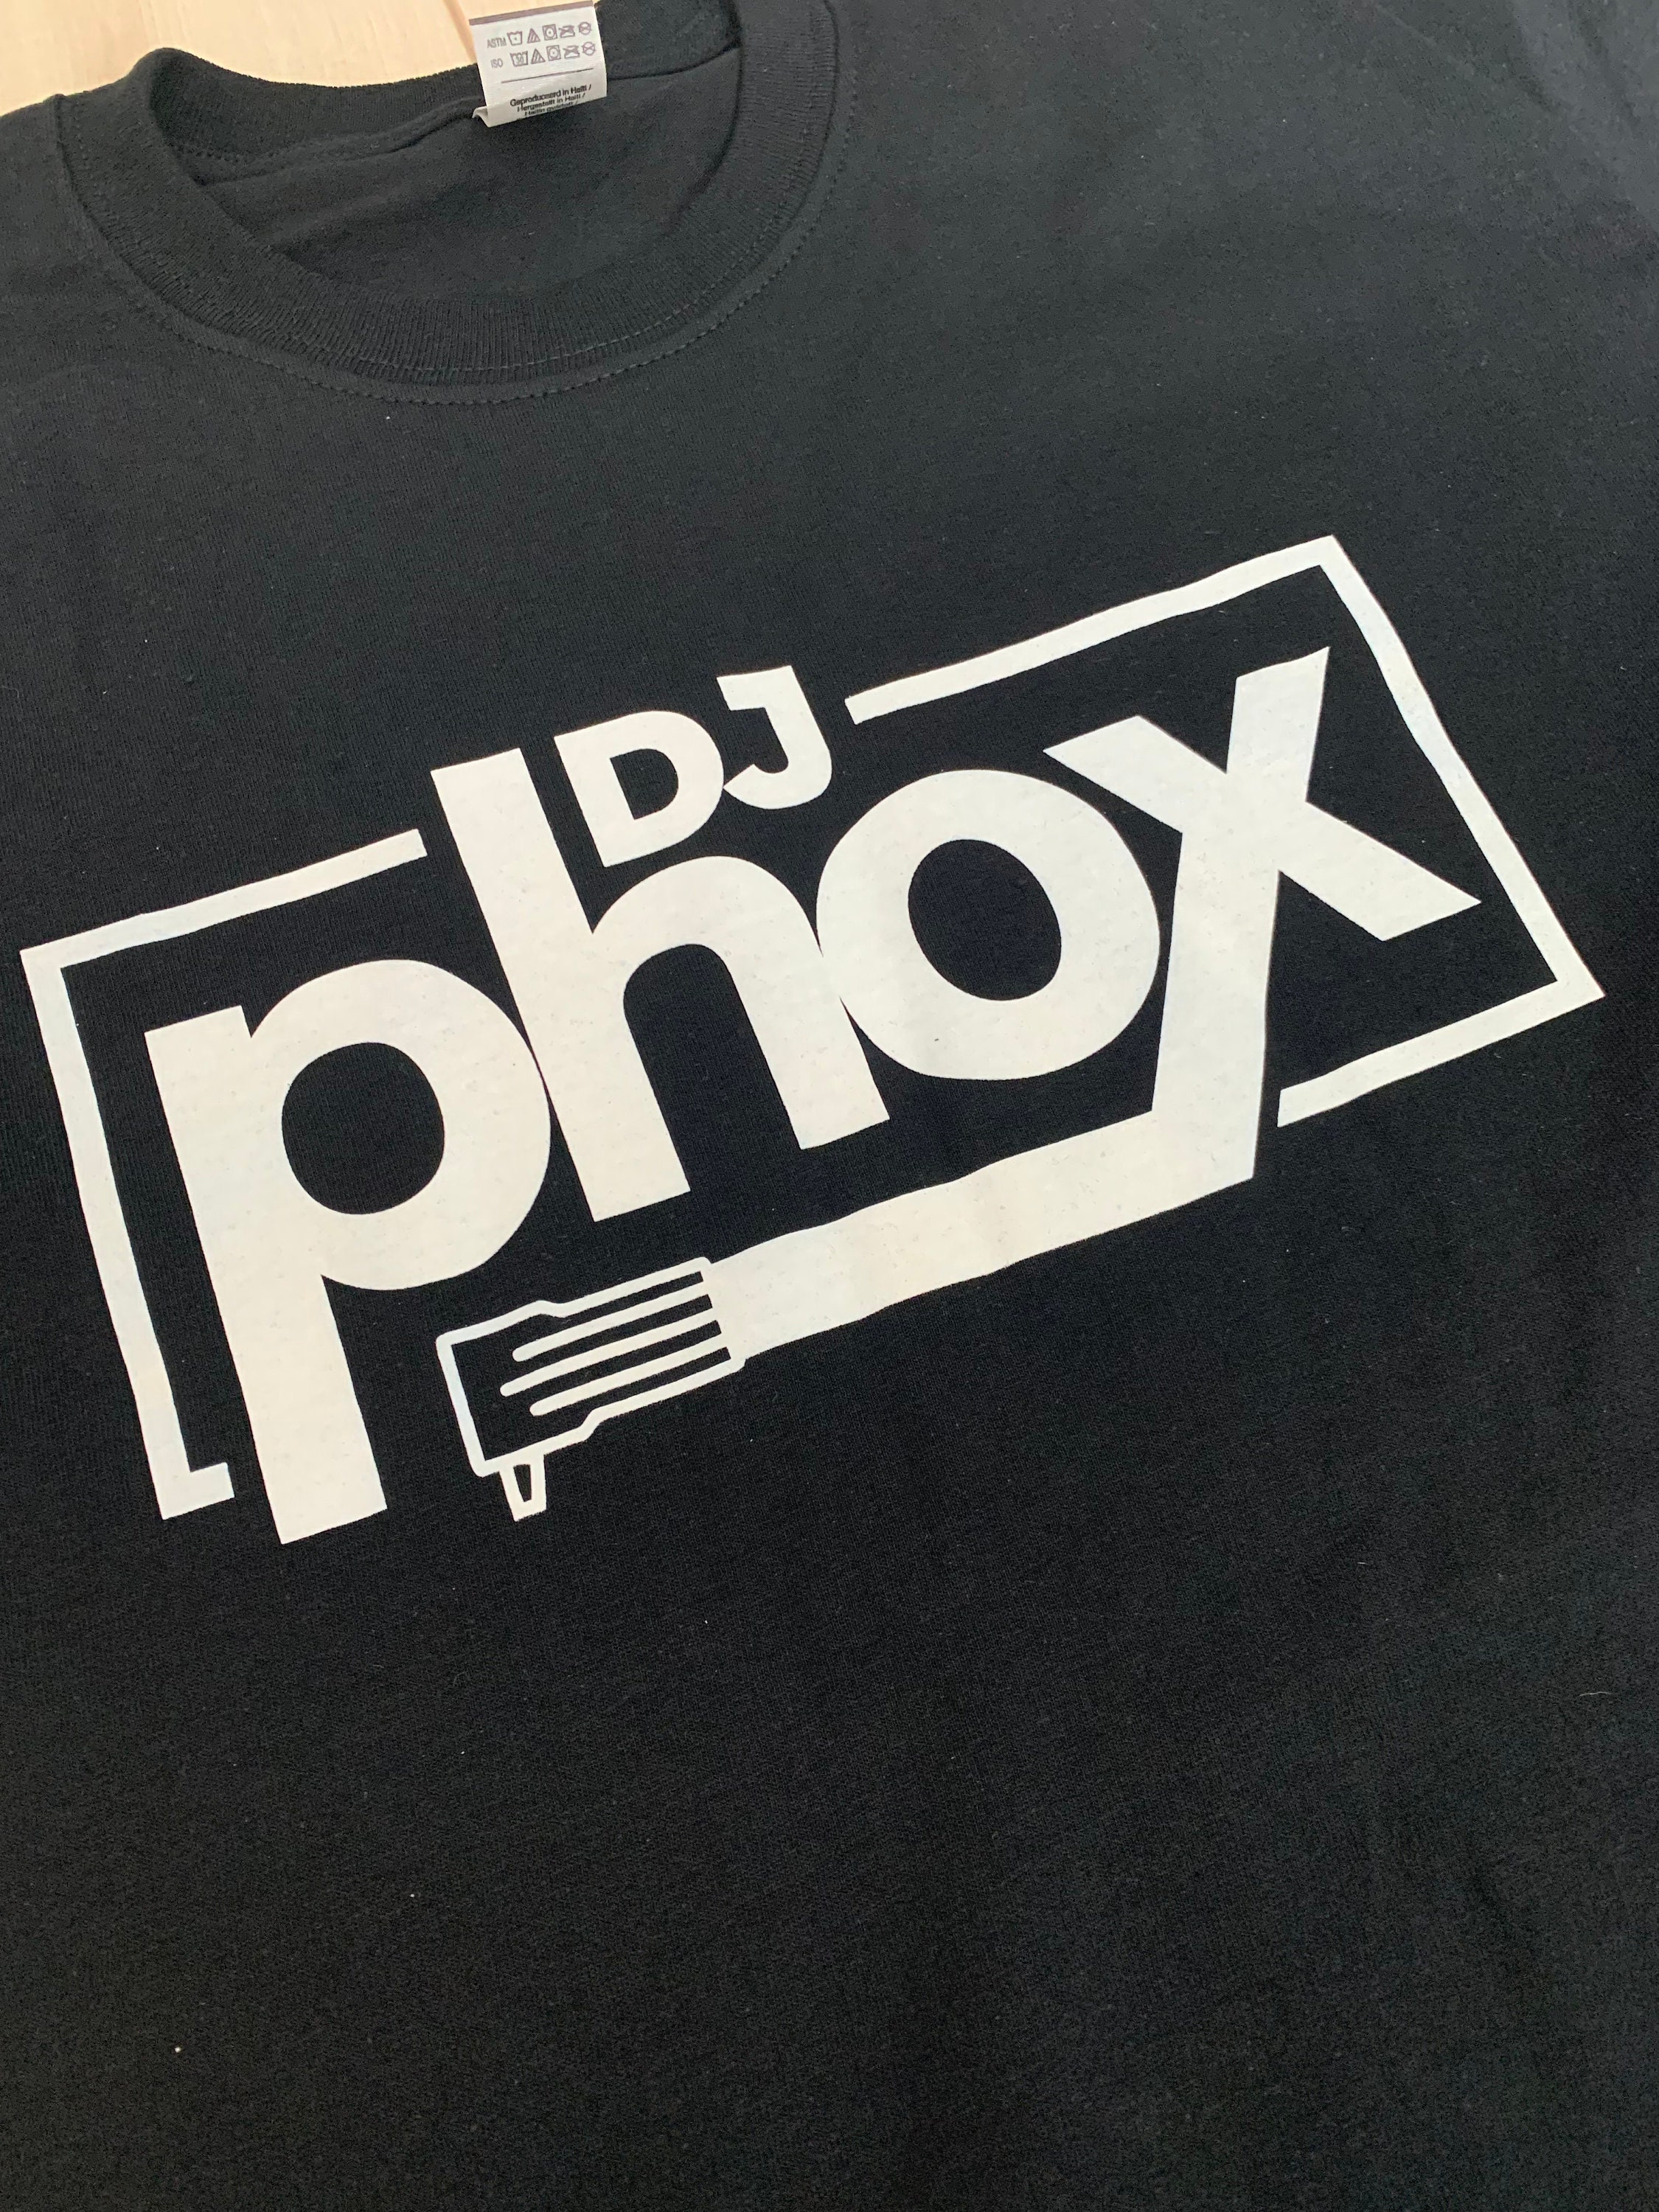 DJ Phox Tee | Twitch.tv/iamdjphox